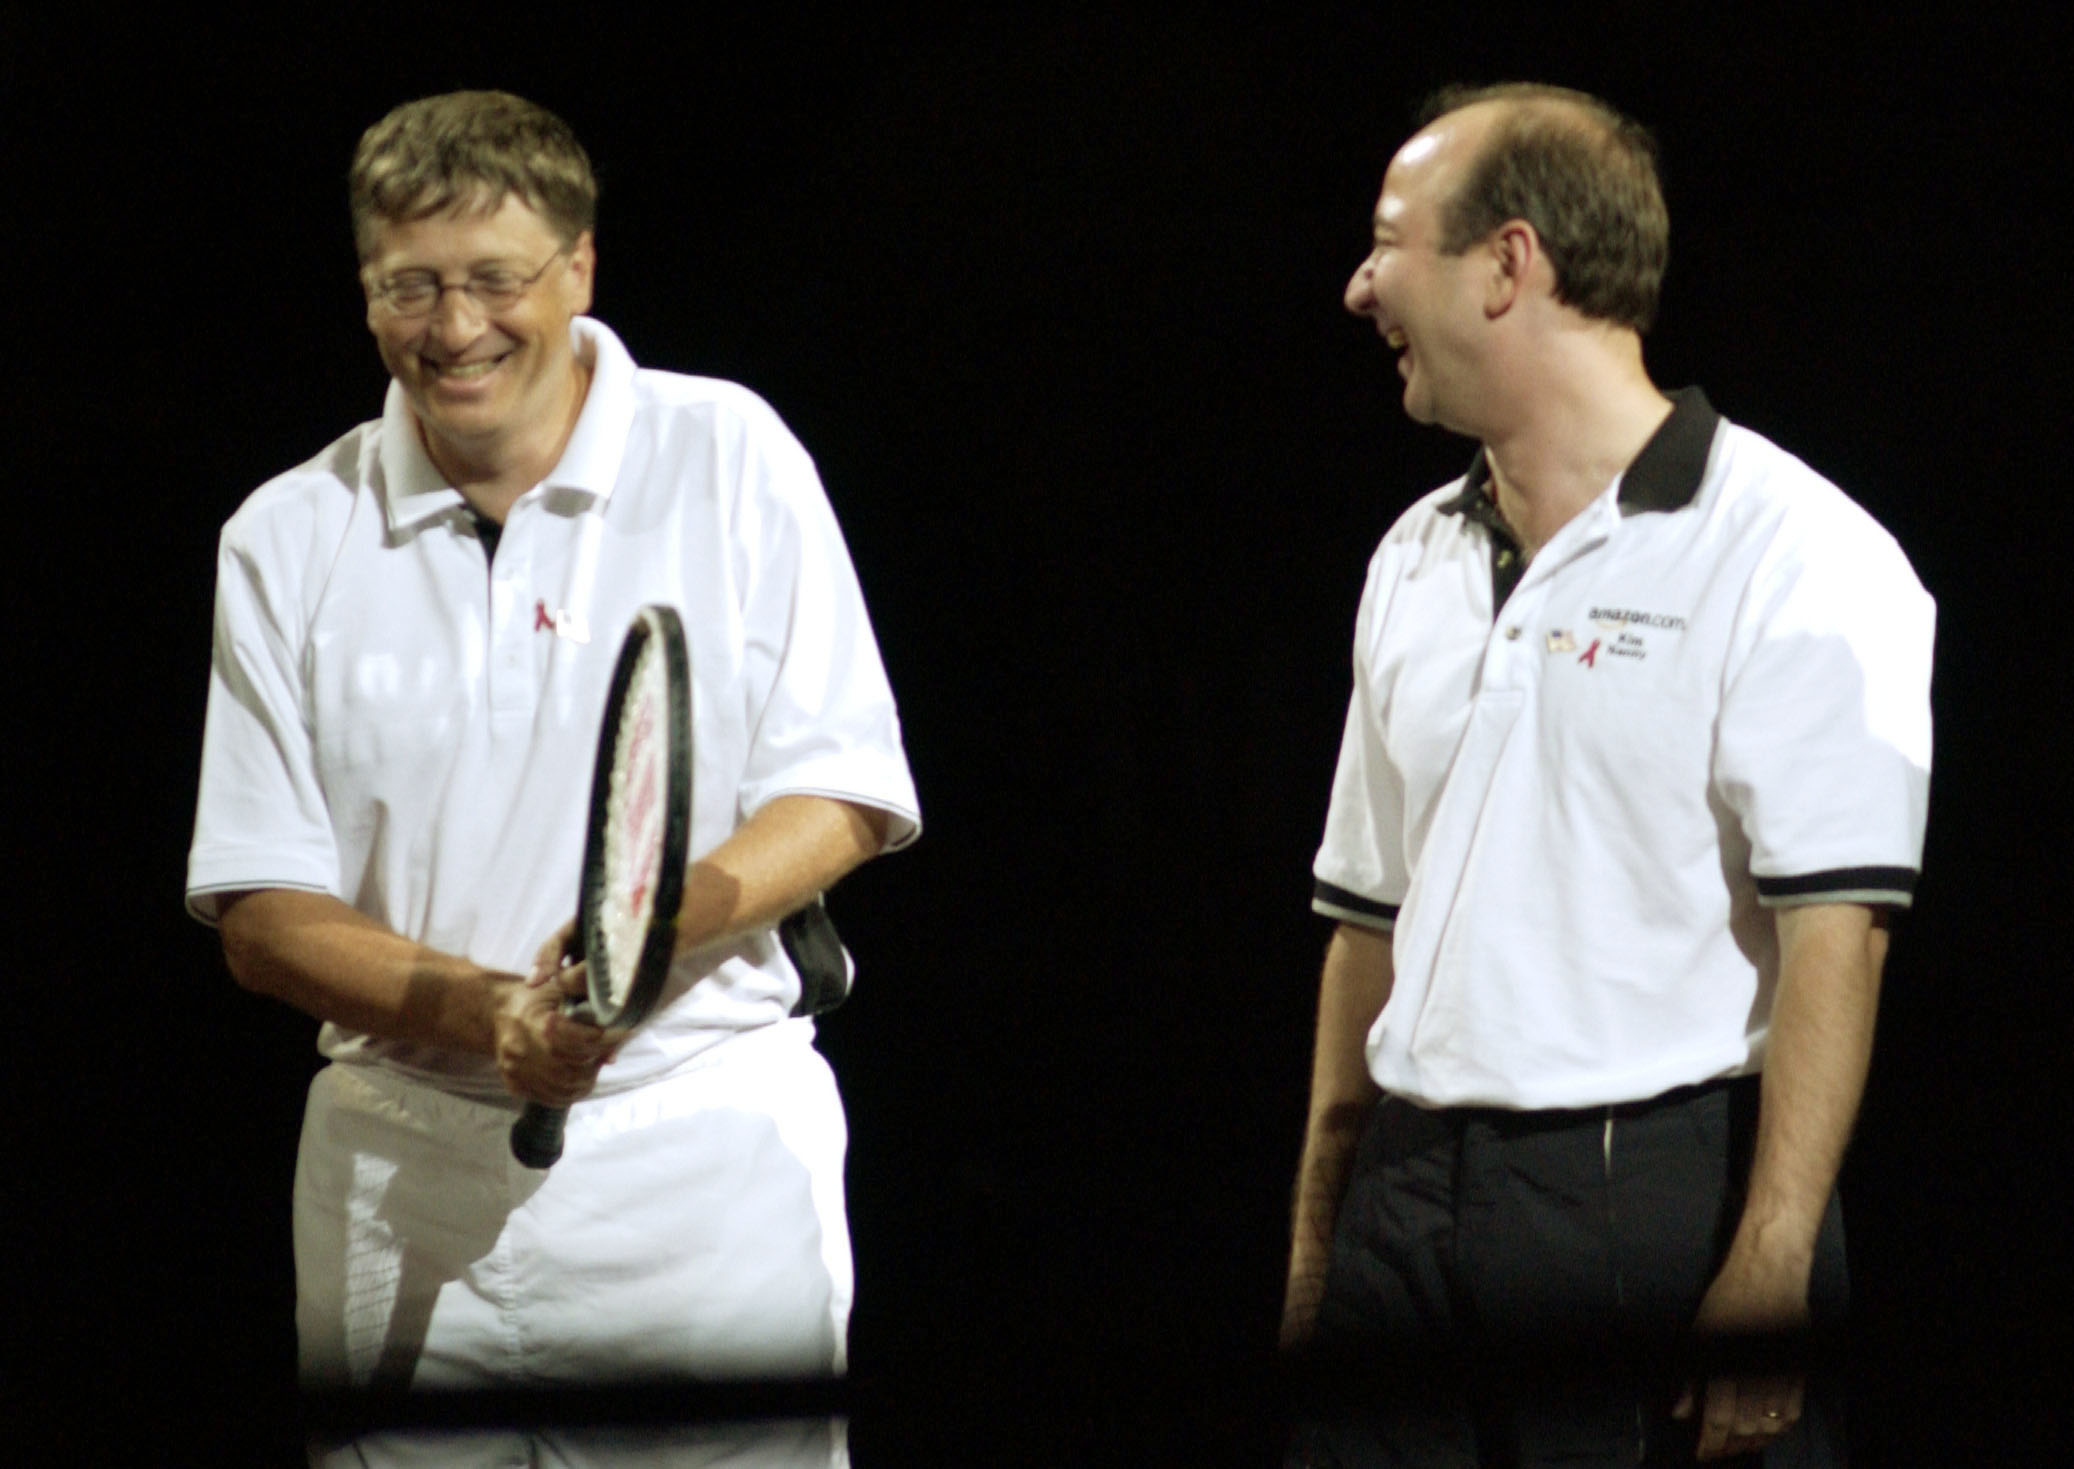 Bill Gates and Jeff Bezos playing tennis in Seattle, Washington, in 2001.